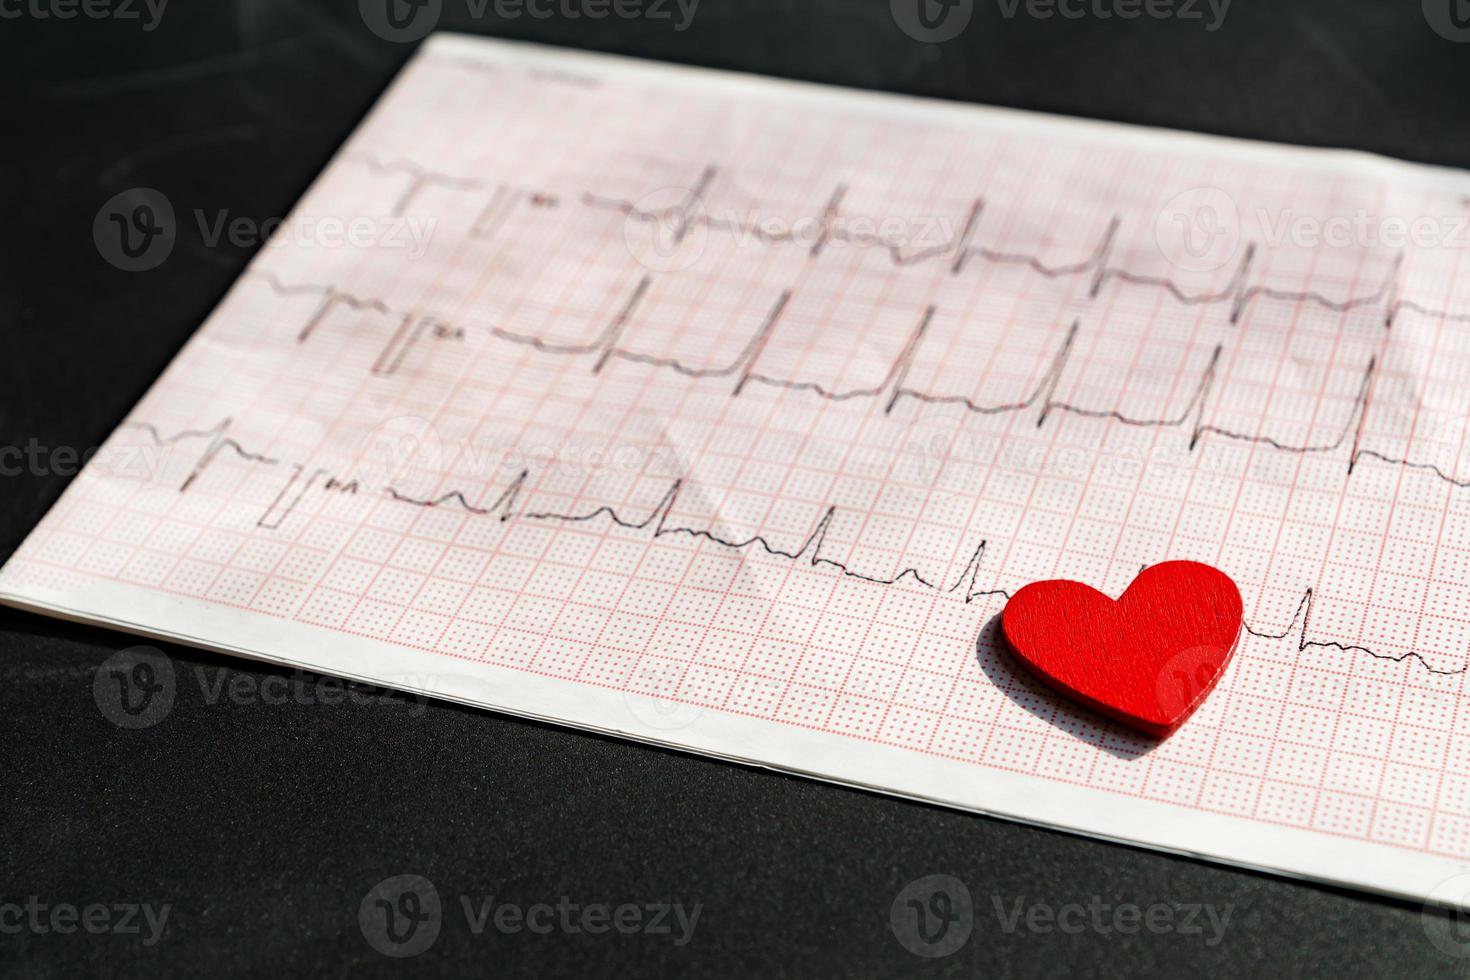 primer plano de un electrocardiograma en papel con corazón de madera roja. papel ecg o ekg sobre fondo negro. concepto médico y sanitario. foto